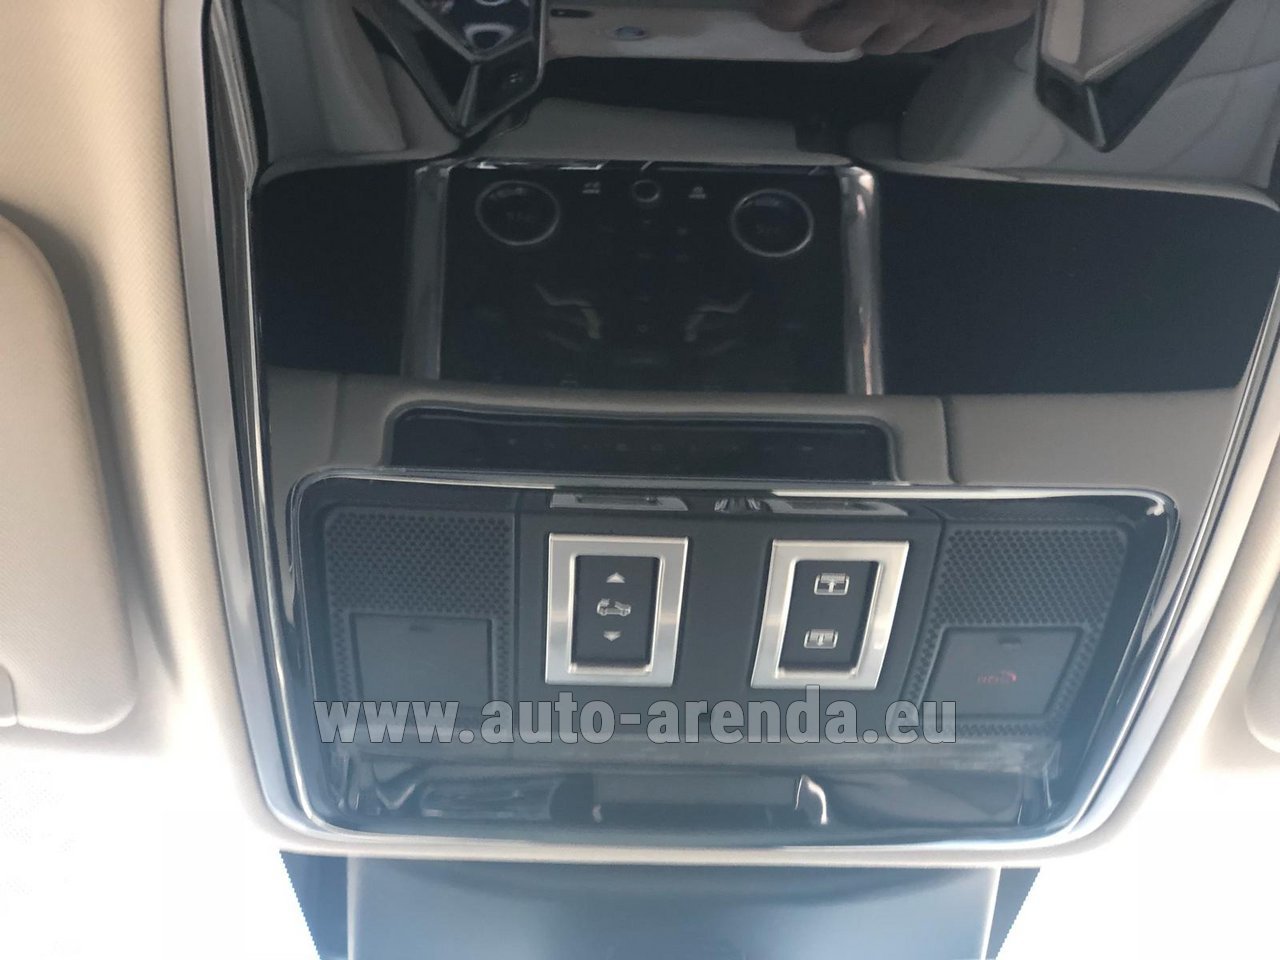 Lr011706 neues Auto-Frontmotor-Motorhauben-Steuer kabel für Range Rover  2014-2018 Motorhauben-Halte draht China Fabrik lieferant Großhandel